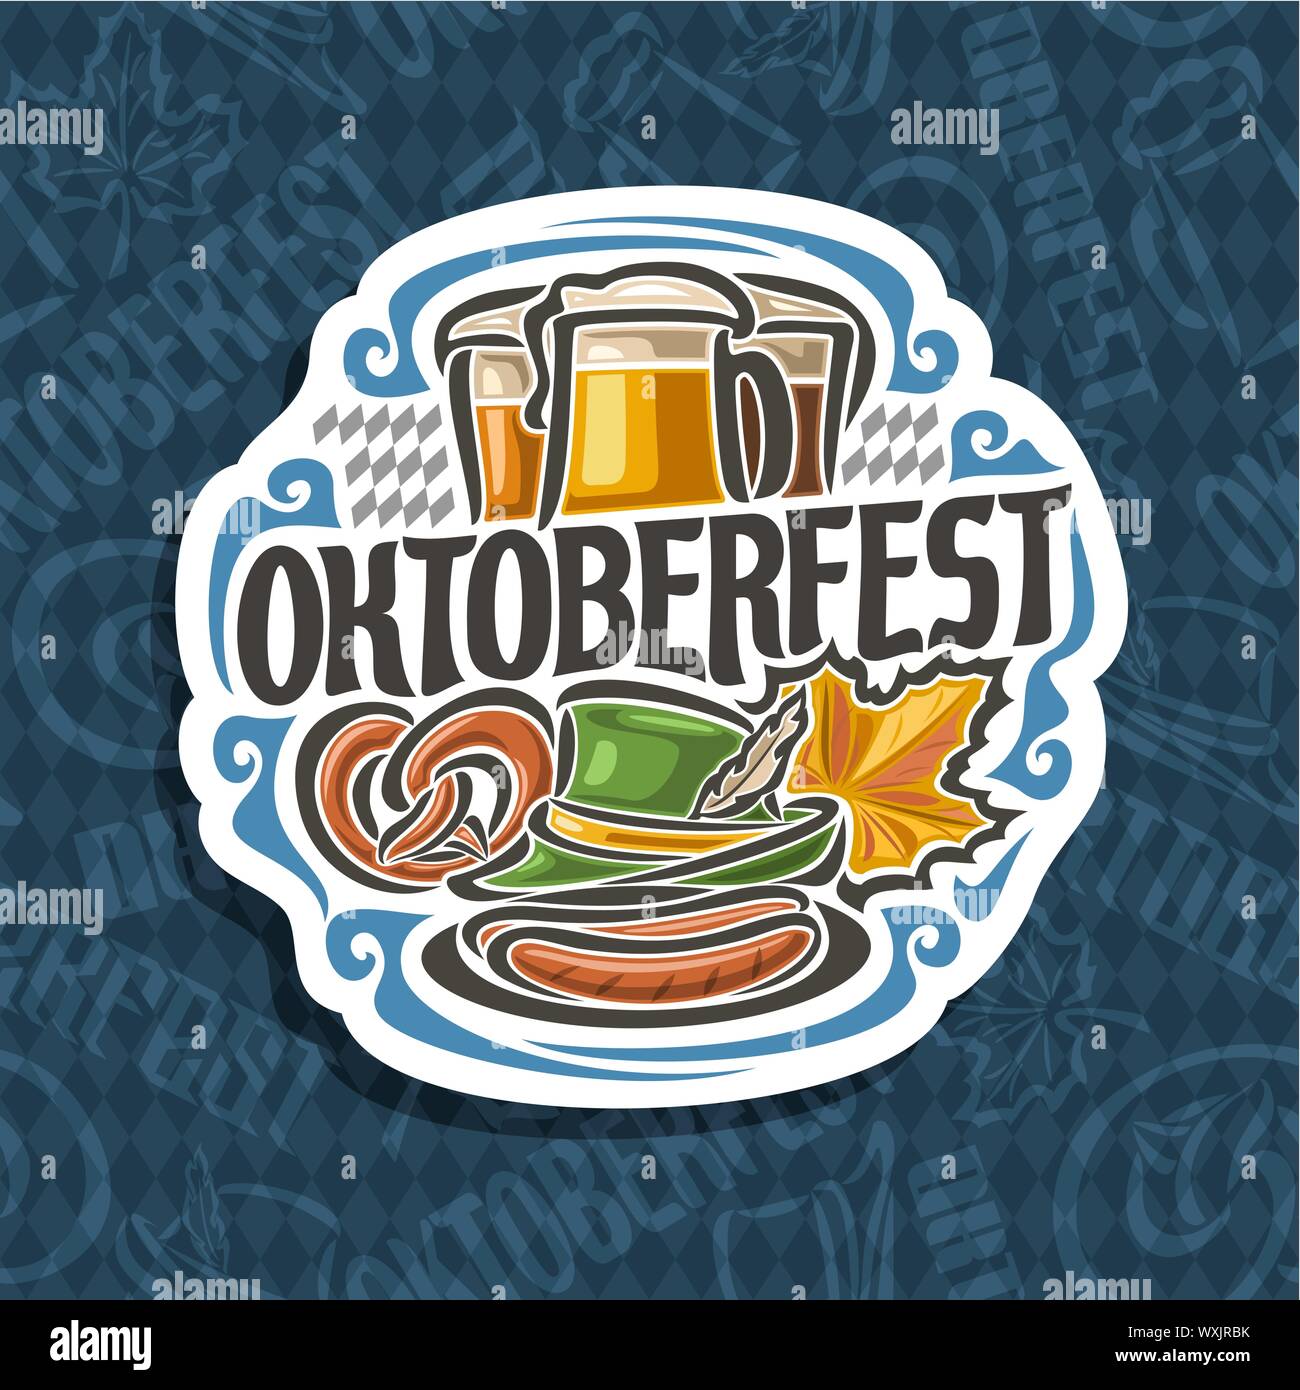 Vector logo for Oktoberfest on blue harlequin pattern: pilsner beer in 3 glass mug, lettering - oktoberfest, pretzel and green hat for fest, october m Stock Vector